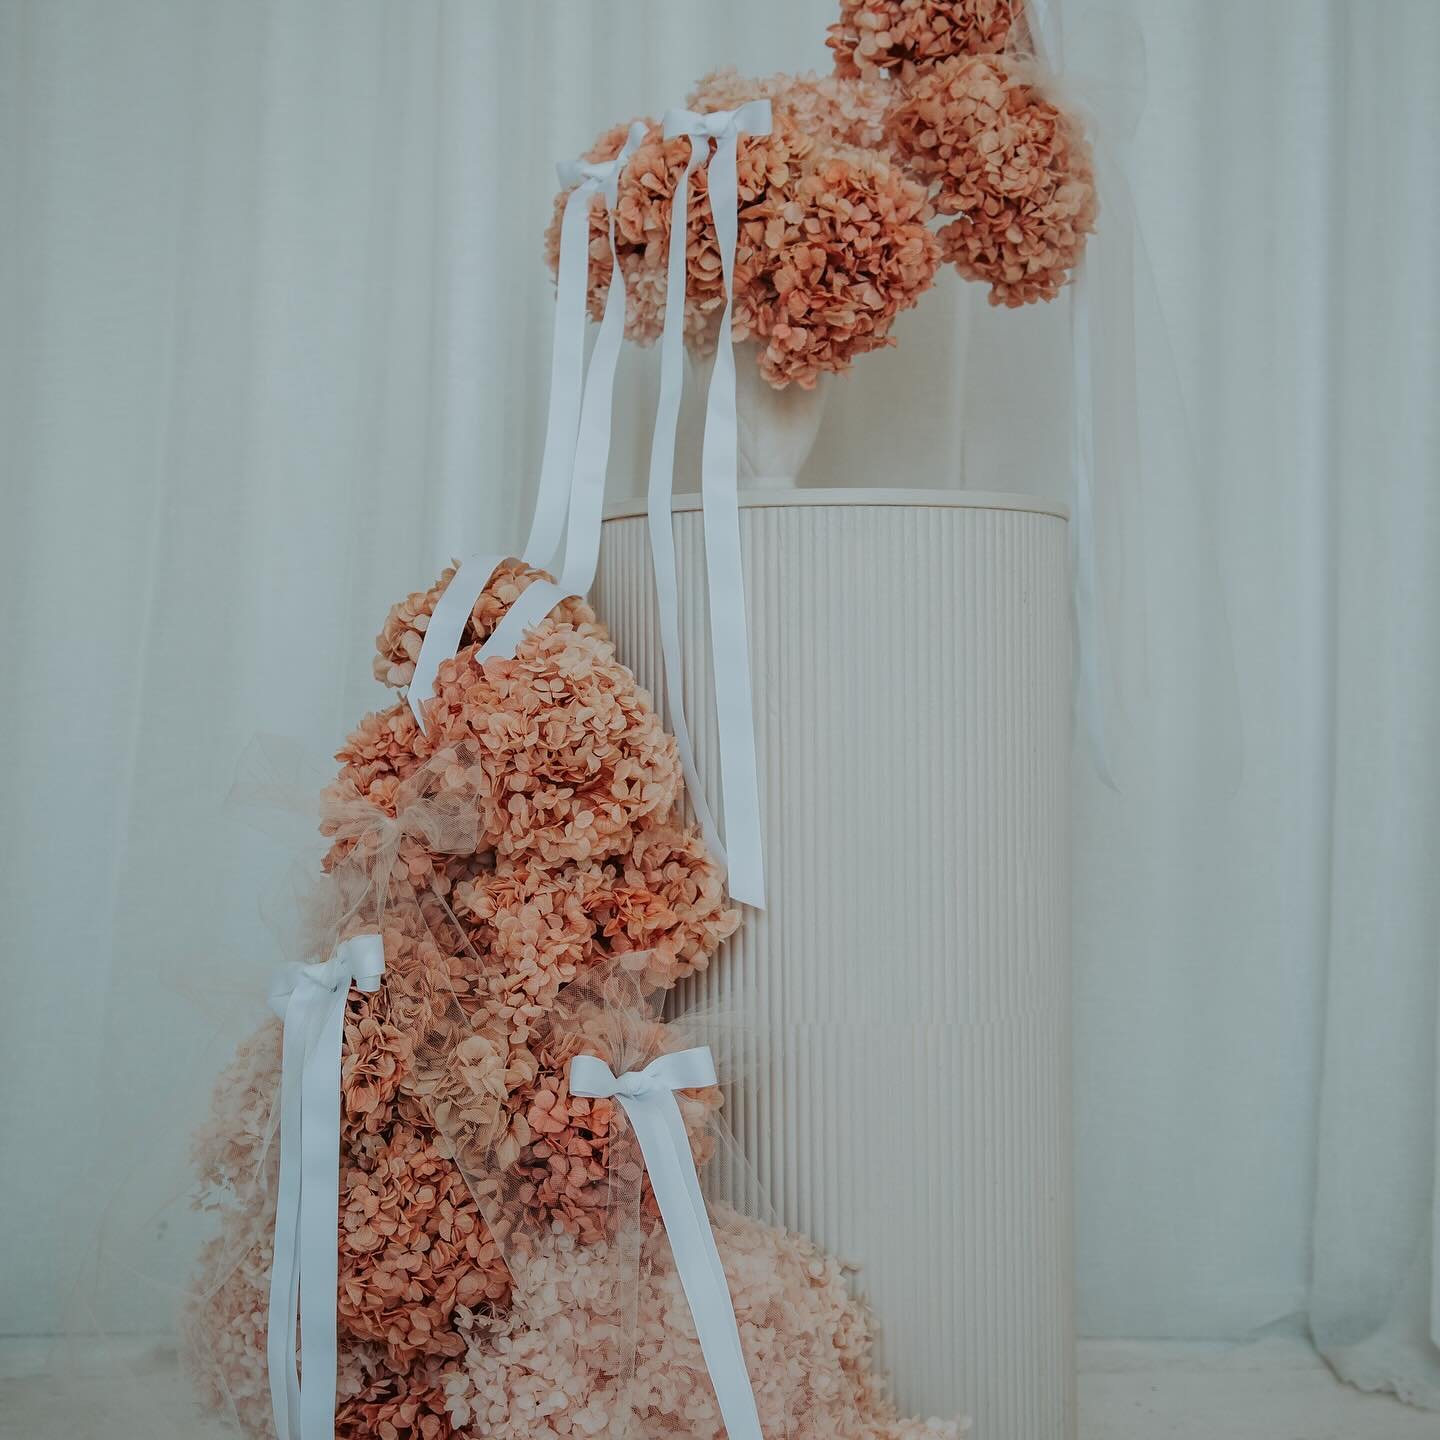 Bows + Hydrangea 🌸✨💕

#weddingsmelbourne #weddings #morningtonpeninsulaweddings #florist #melbourneflorist